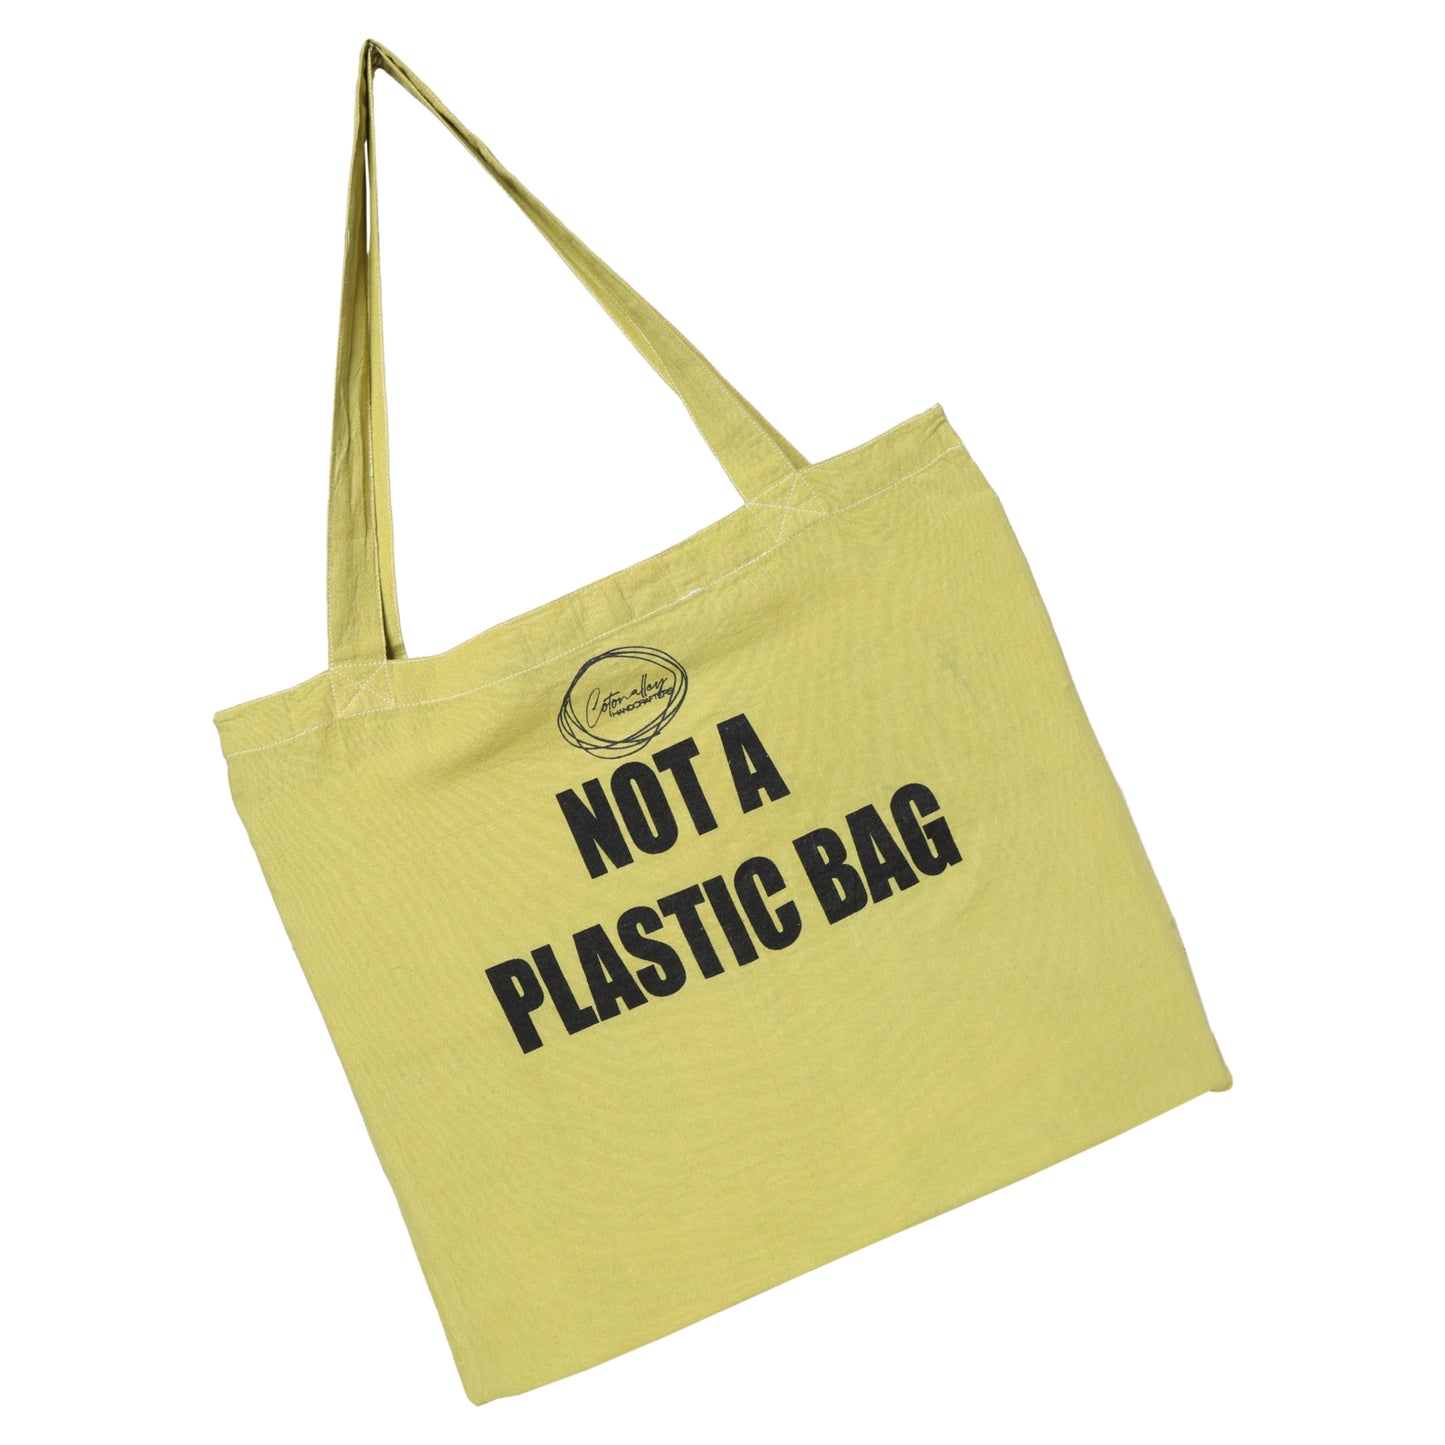 Not A Plastic Bag Light Green